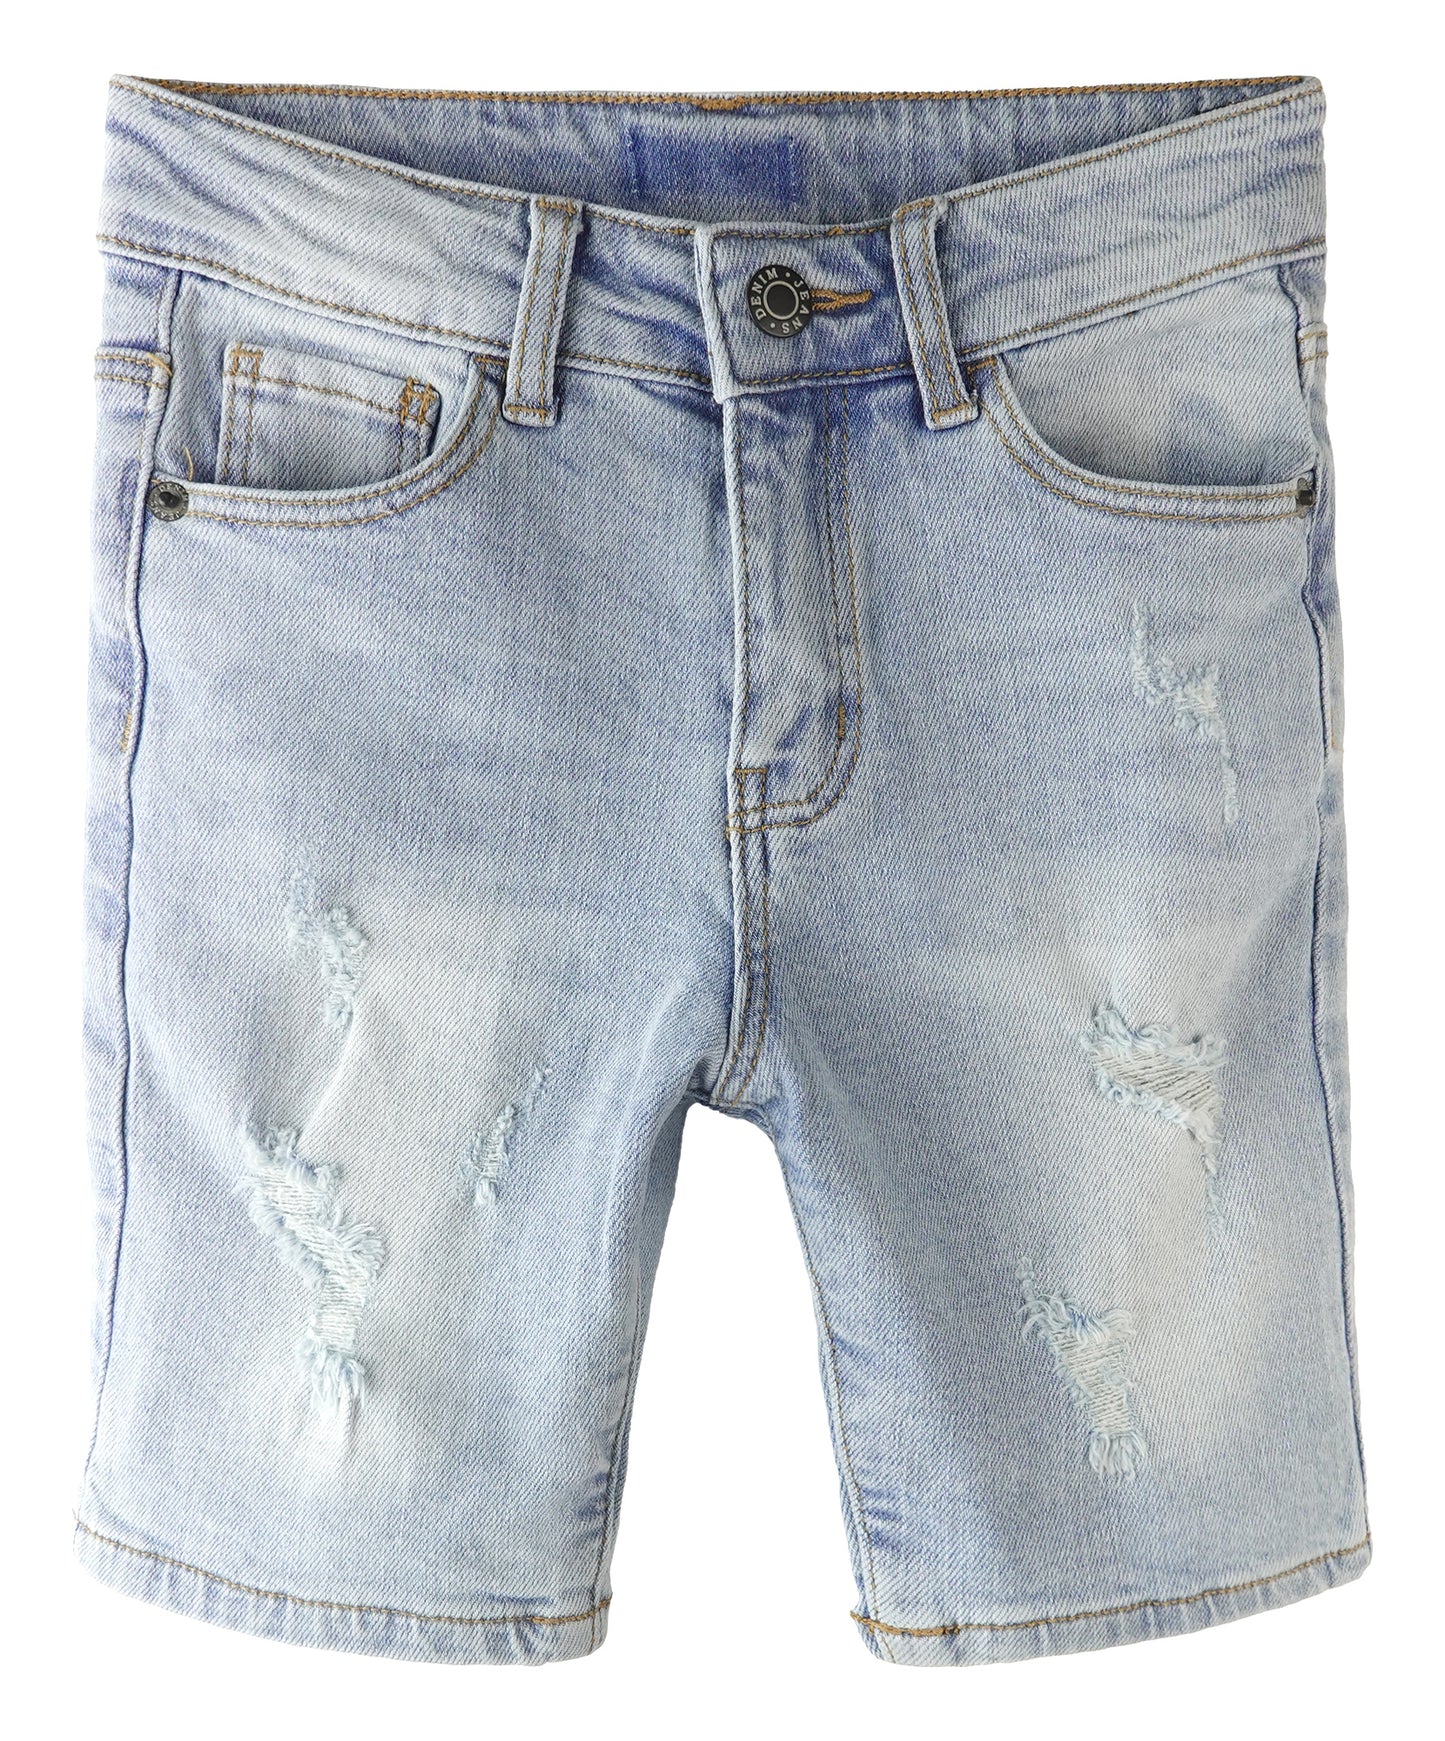 Baby Denim Shorts,Elastic WaistBand Inside Simple Jeans Summer Half Pants